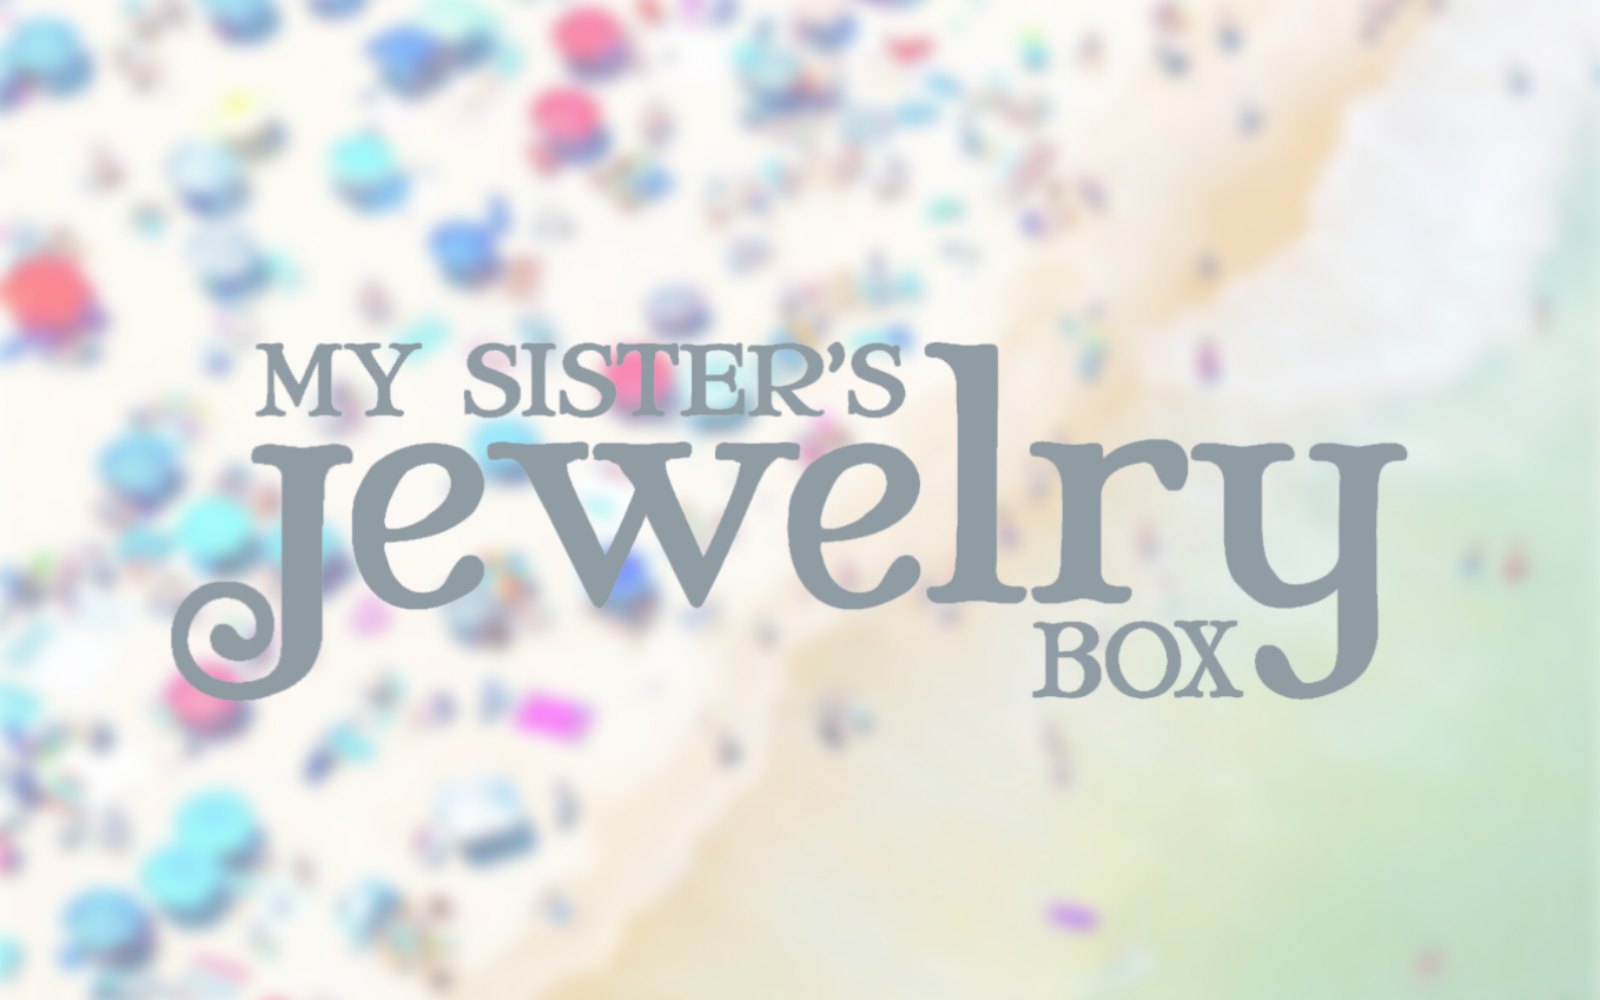 My Sister's Jewelry Box